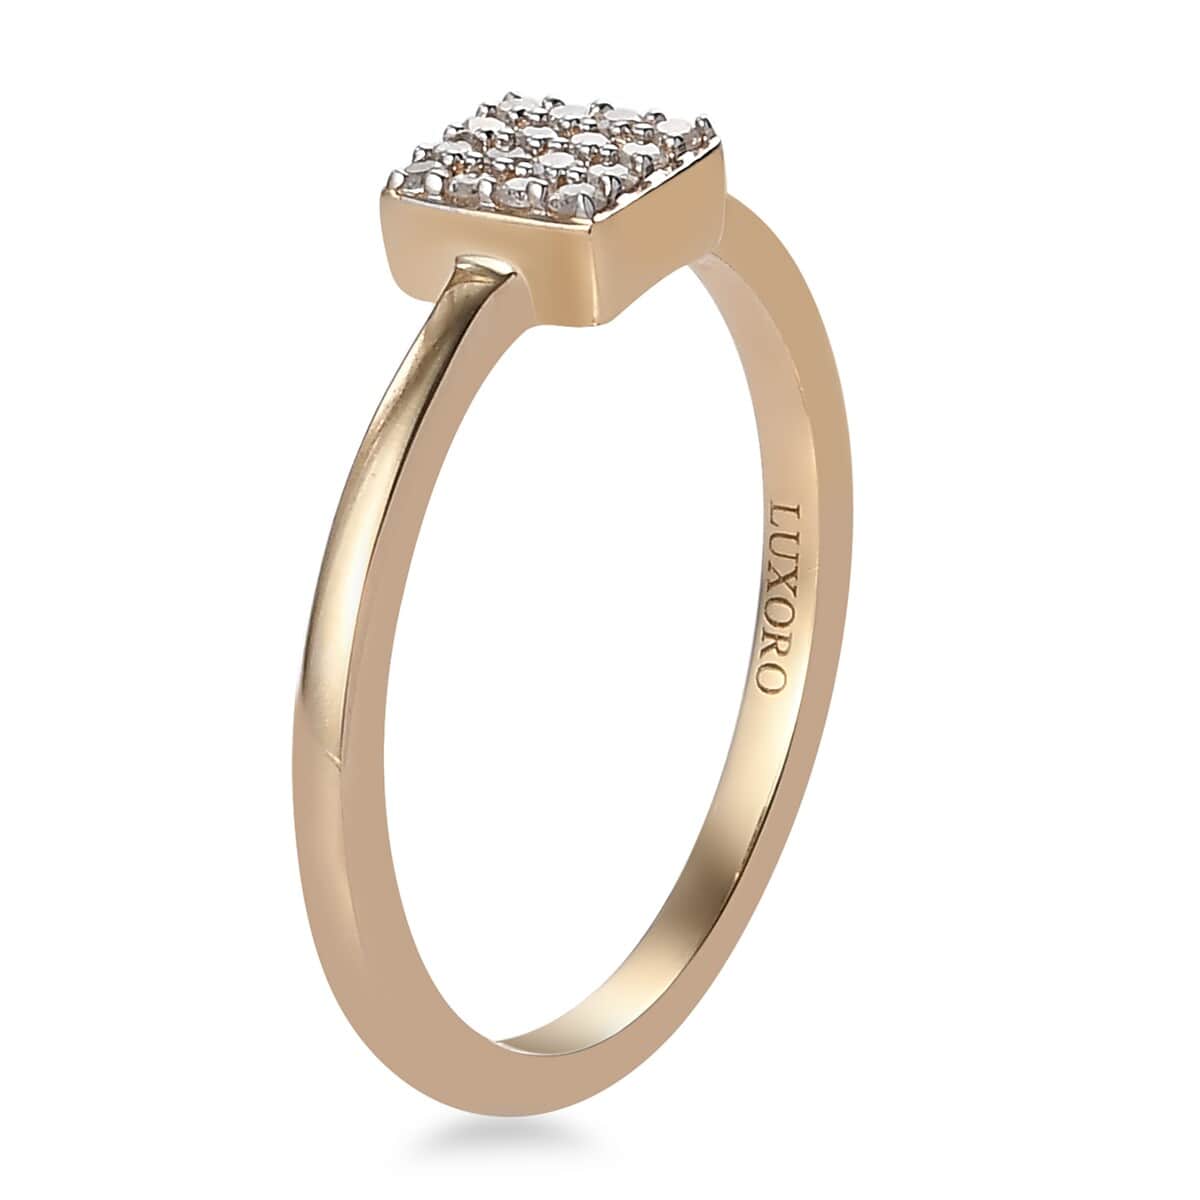 LUXORO 10K Yellow Gold Diamond Ring (Size 7.0) 0.10 ctw image number 3